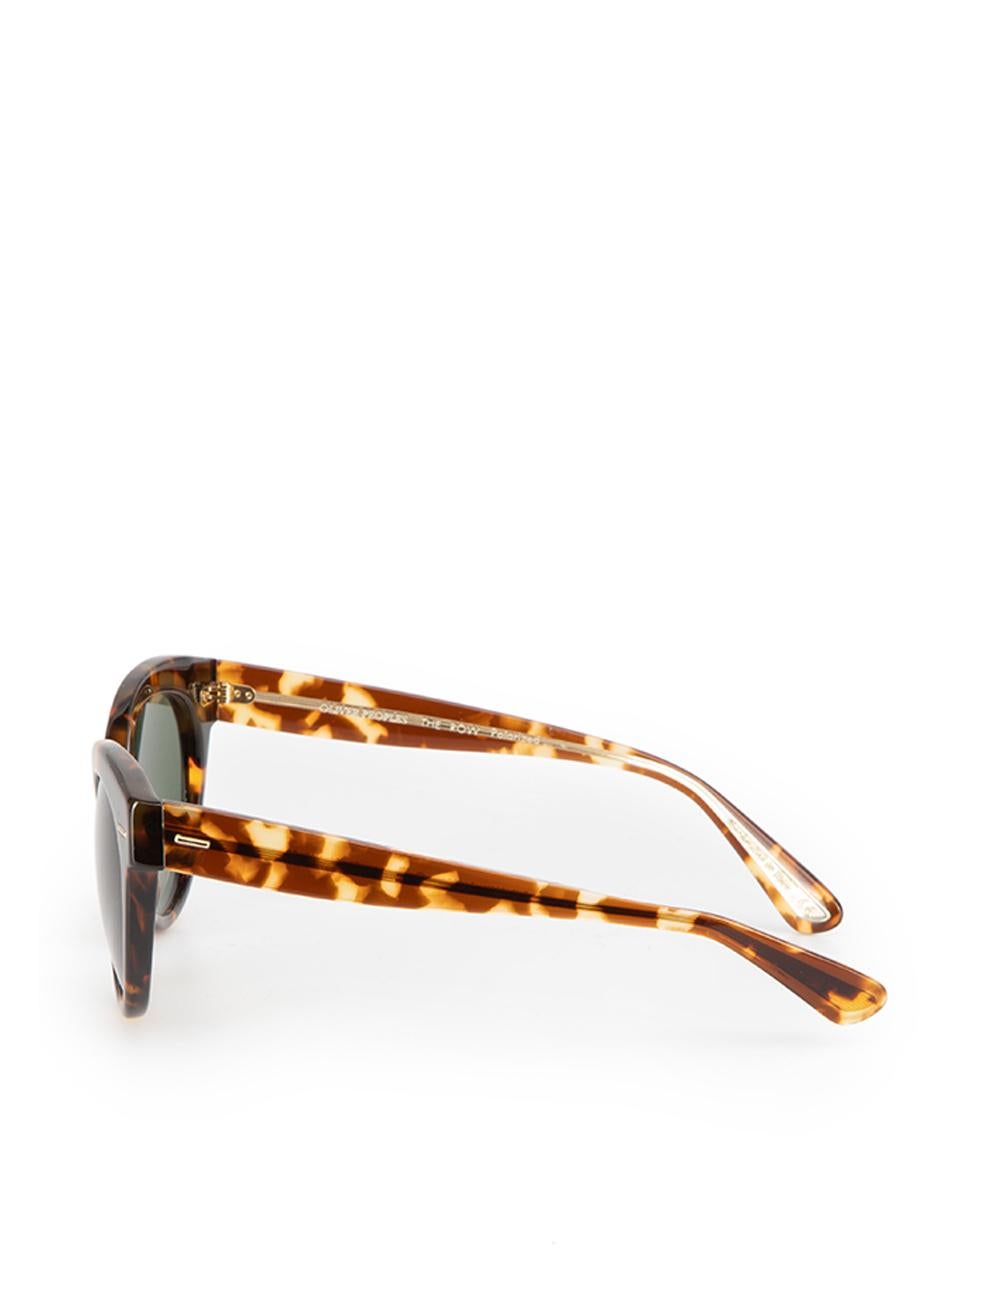 Oliver Peoples Women's Brown Tortoiseshell Cat Eye Sunglasses 1